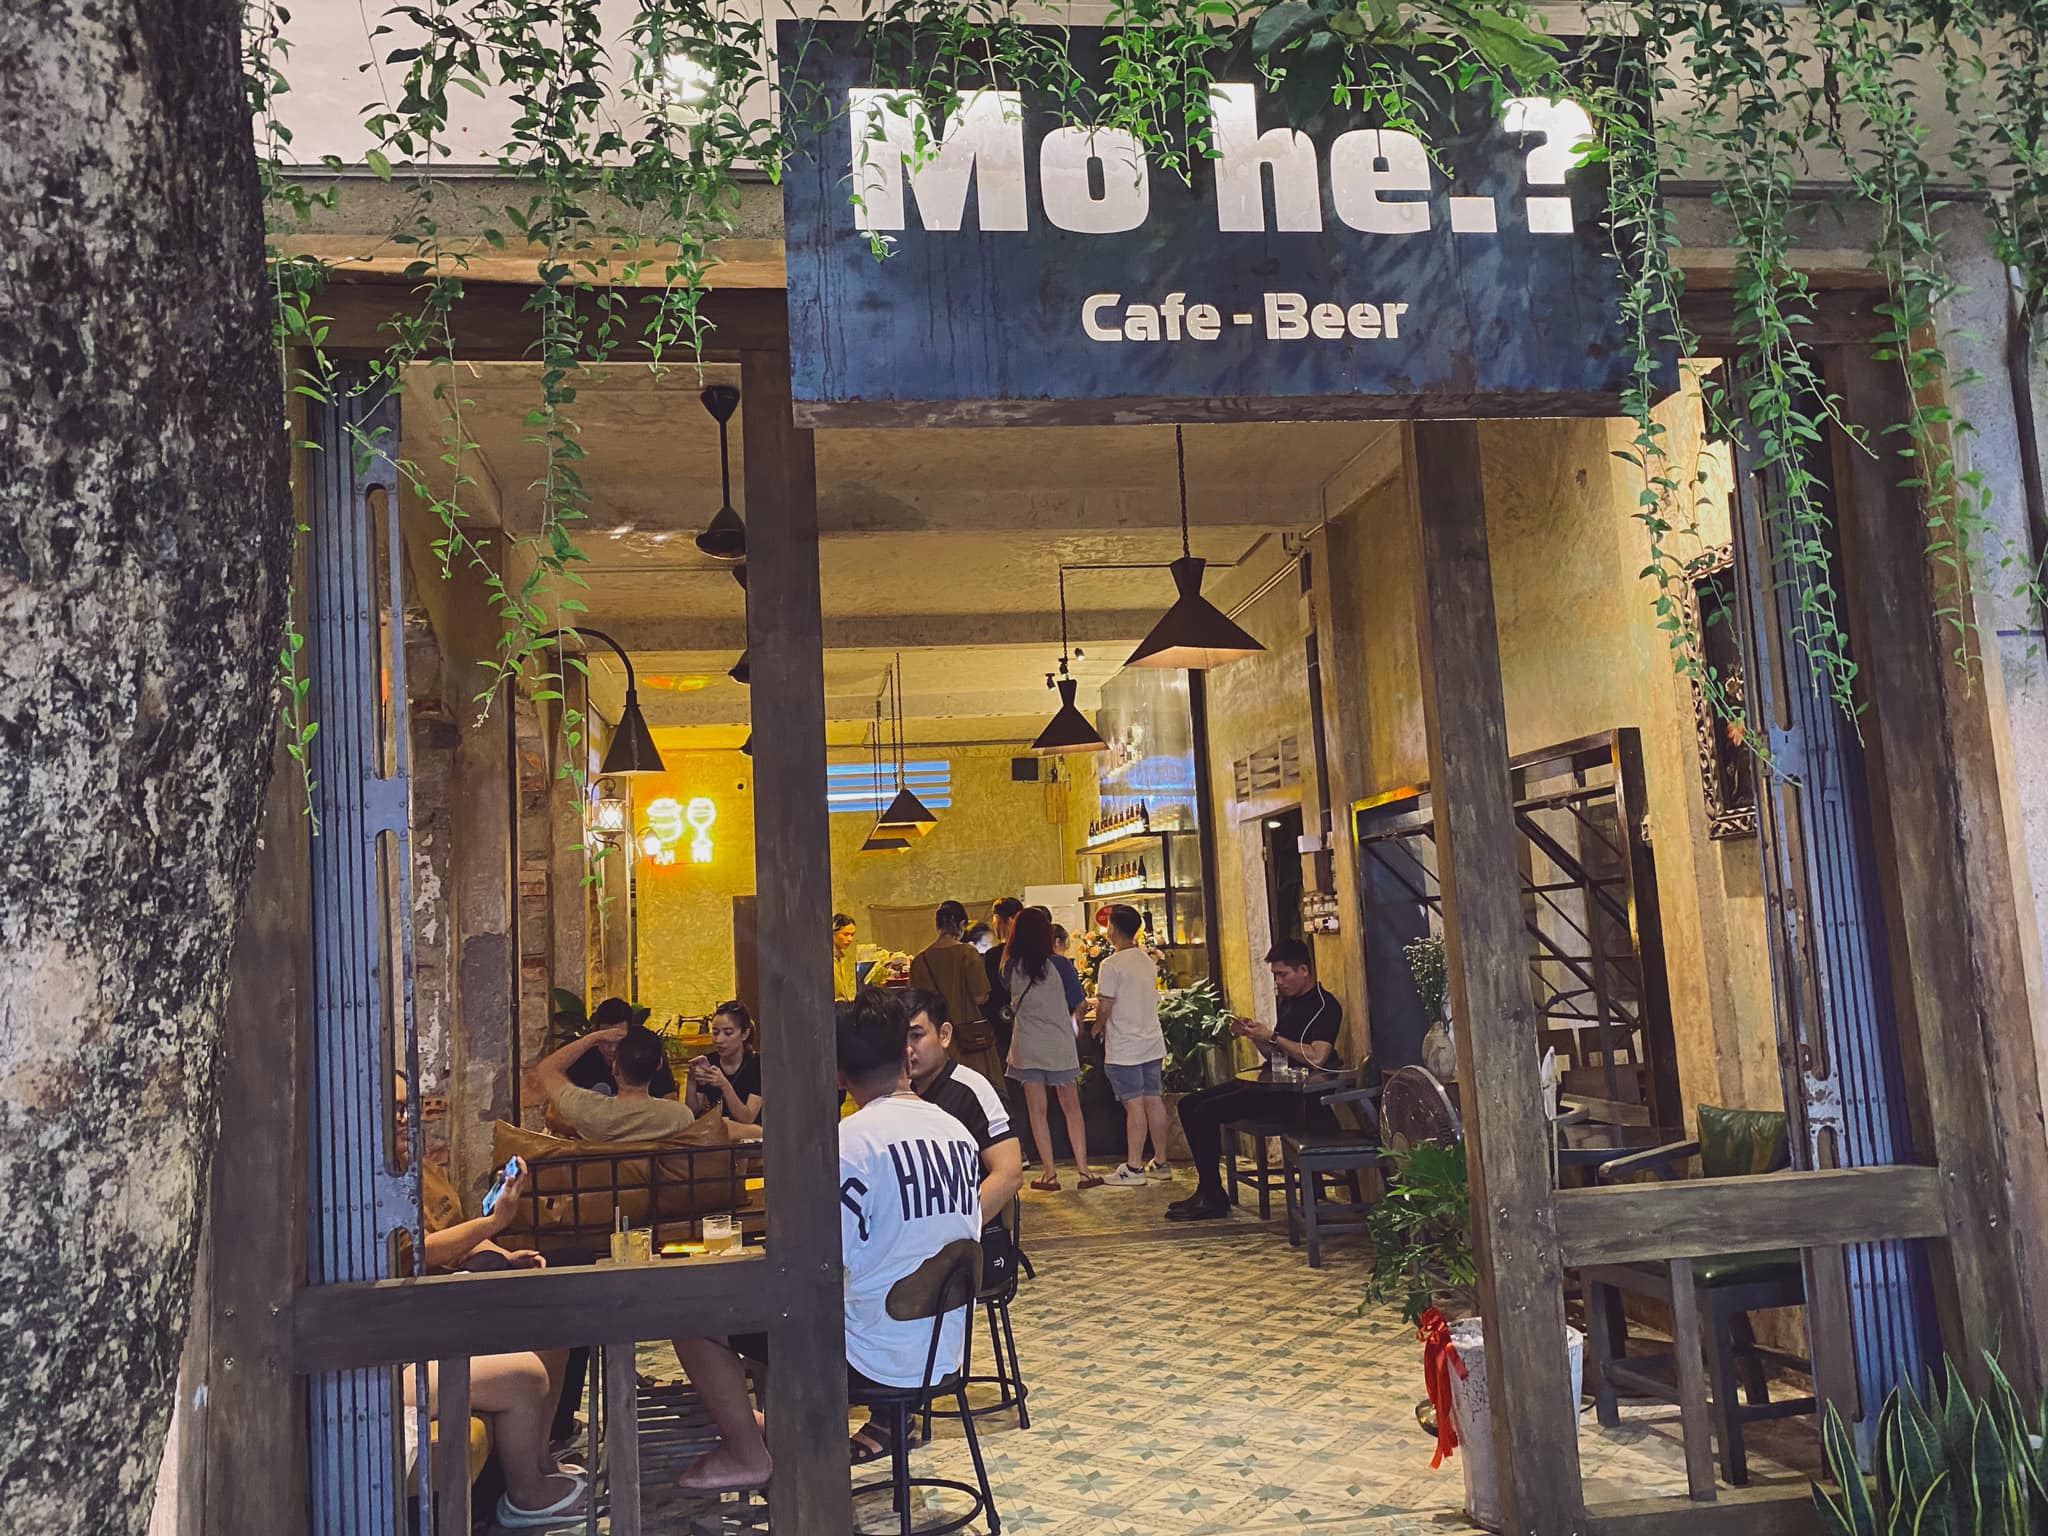 Mo he. Cafe - Beer from the front door